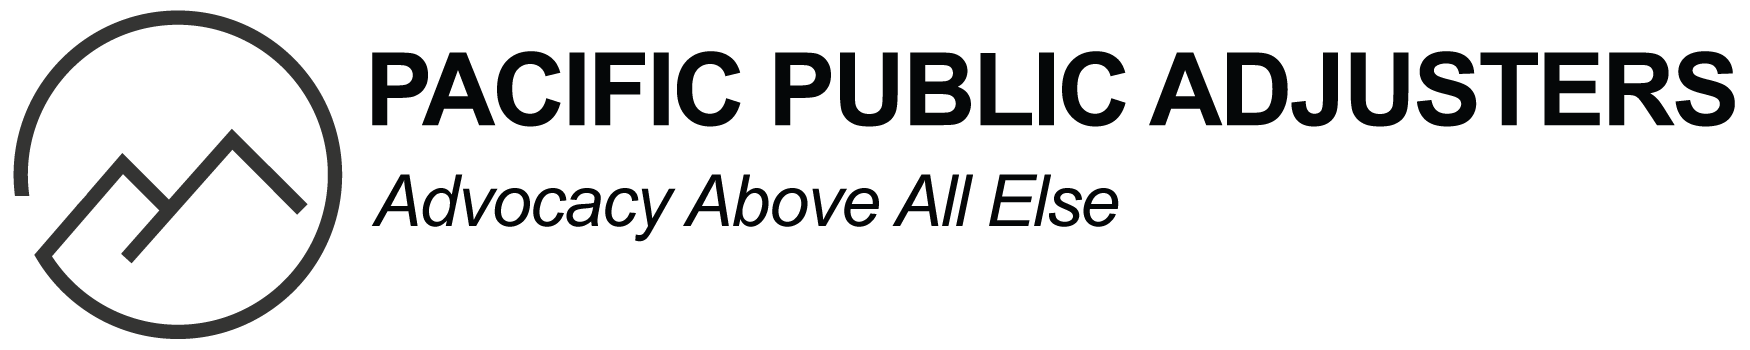 Pacific Public Adjusters